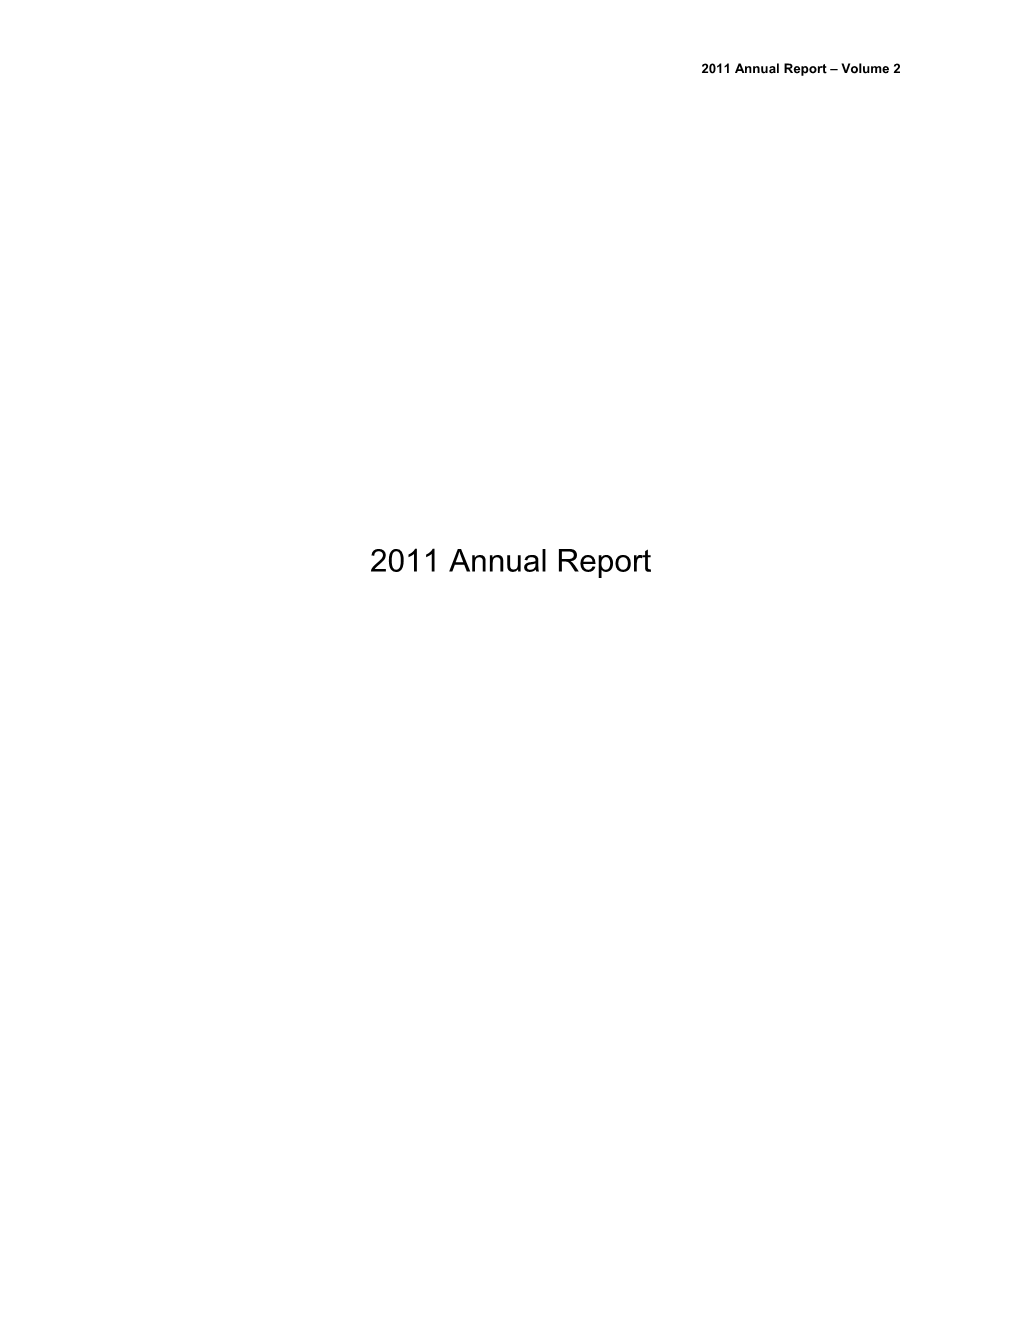 2011 Annual Report Volume 2